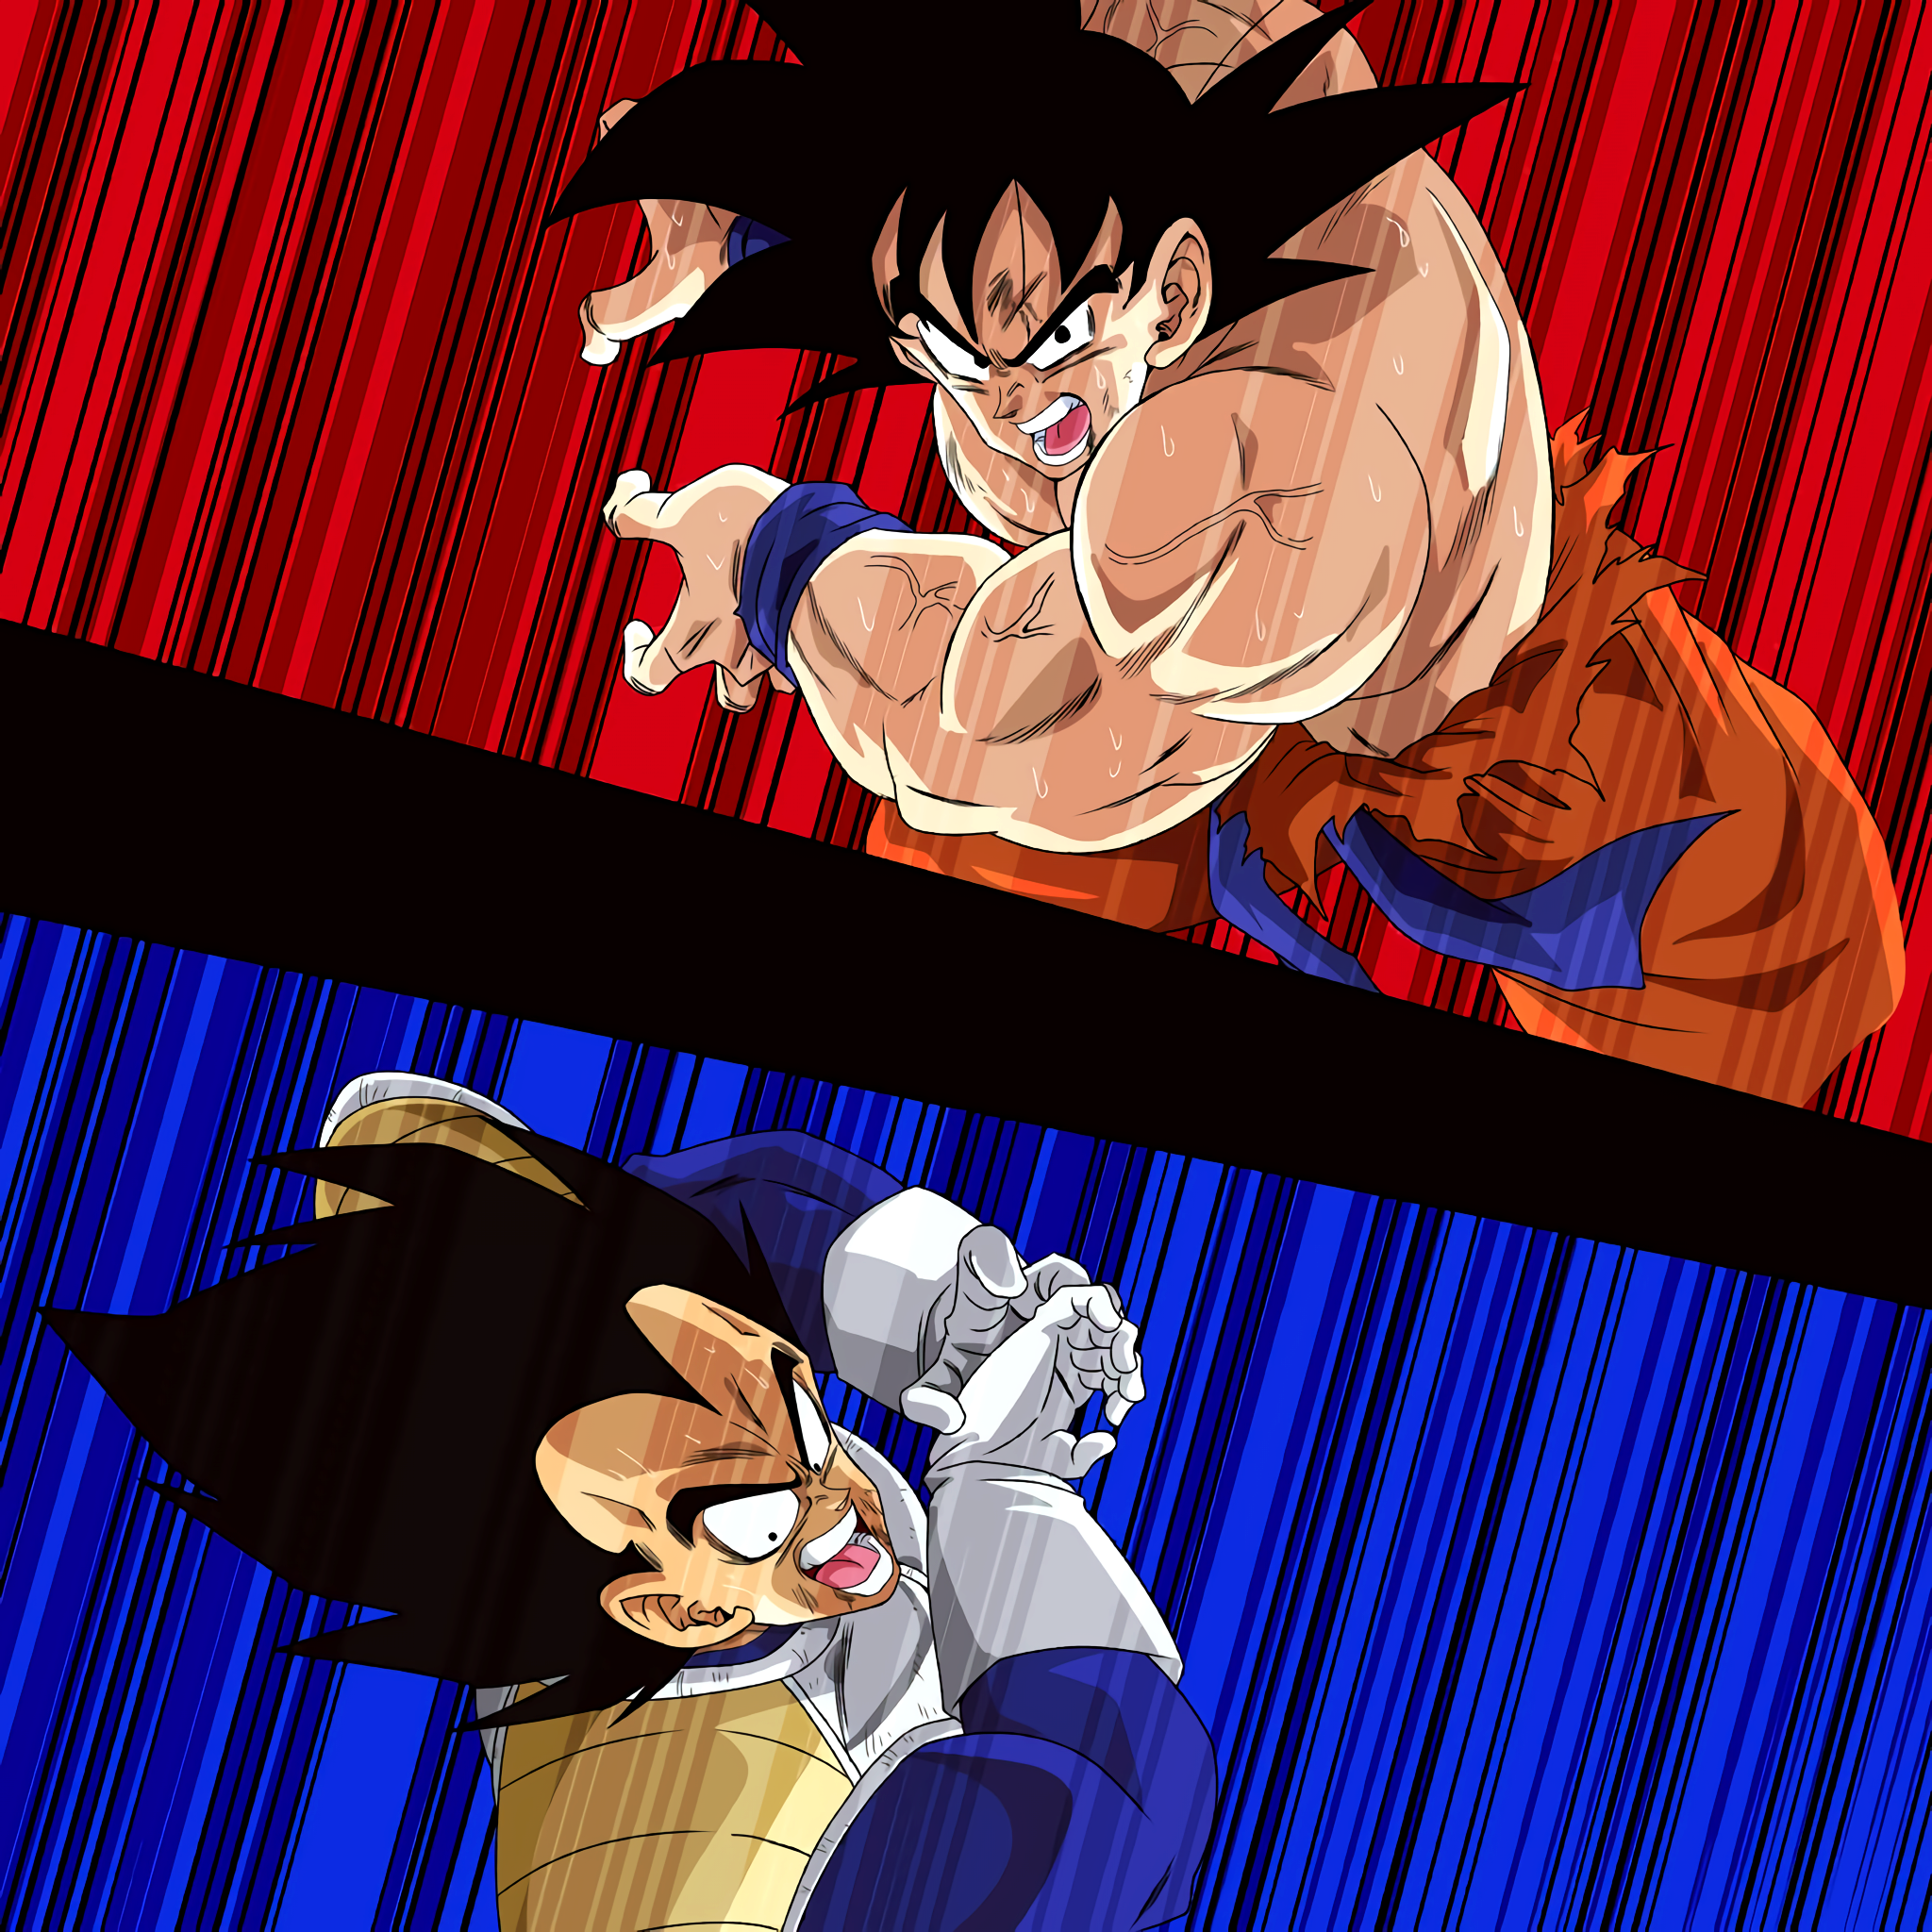 Goku vs Vegeta Wallpaper [DB Legends] by Maxiuchiha22 on DeviantArt